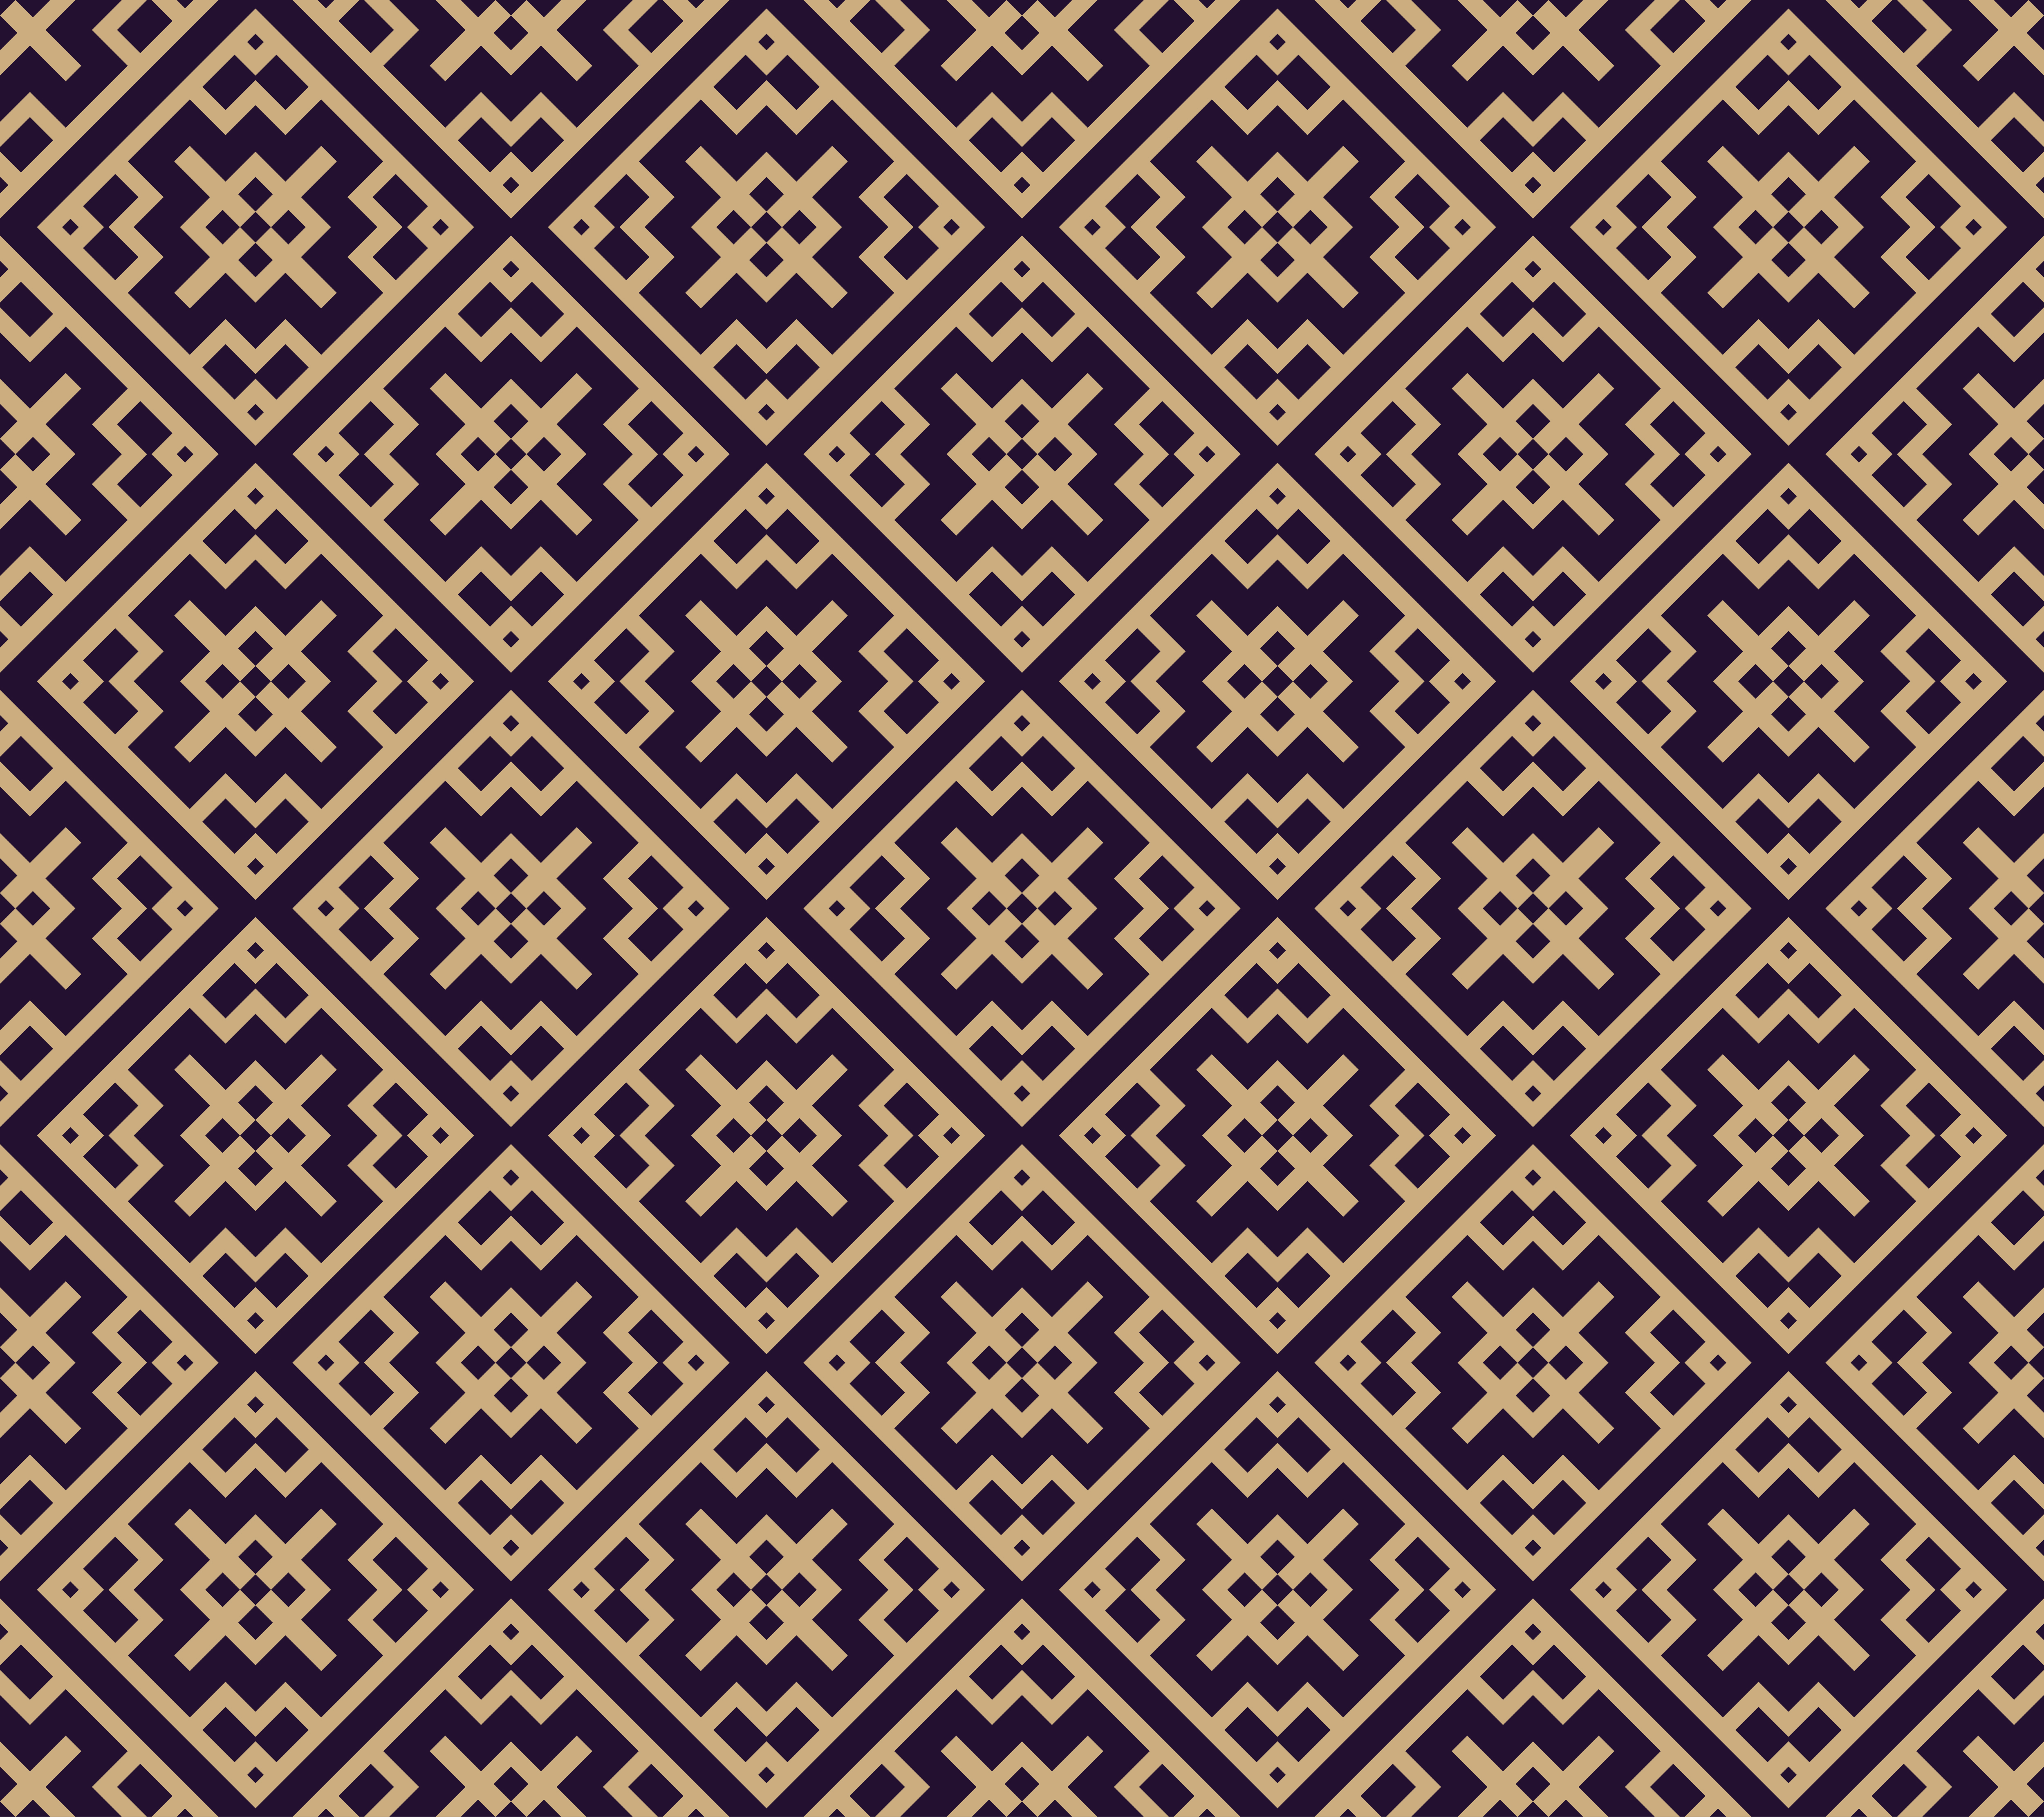 Vector seamless pattern. Modern stylish texture. Repeating geometric